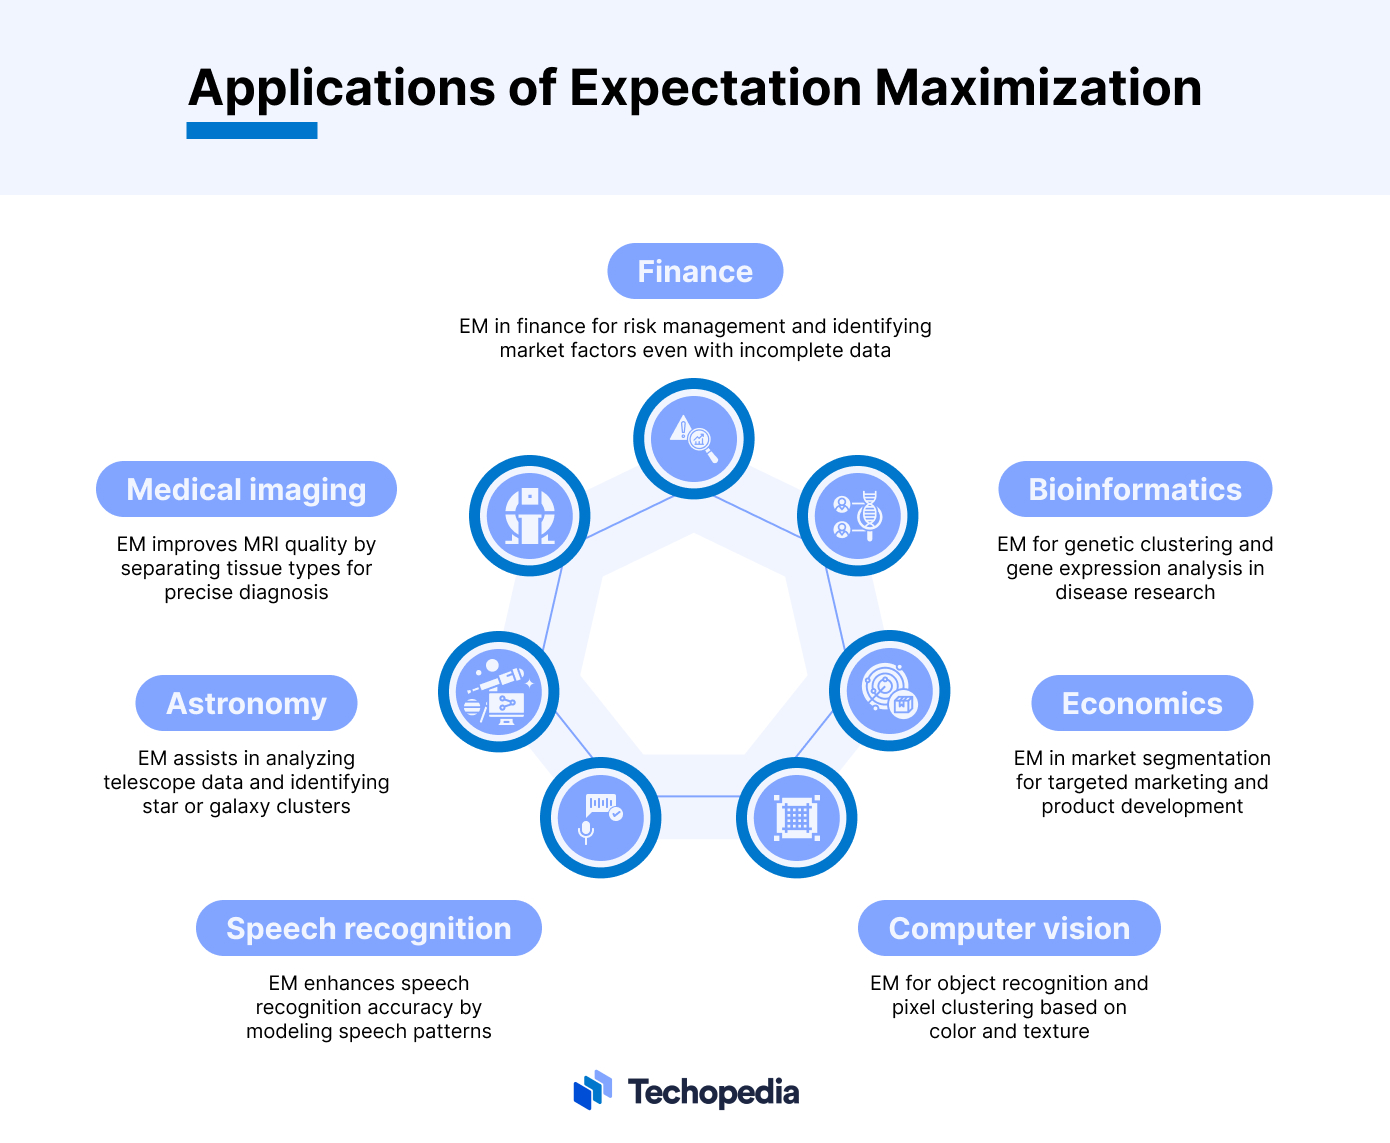 Applications of Expectation Maximization